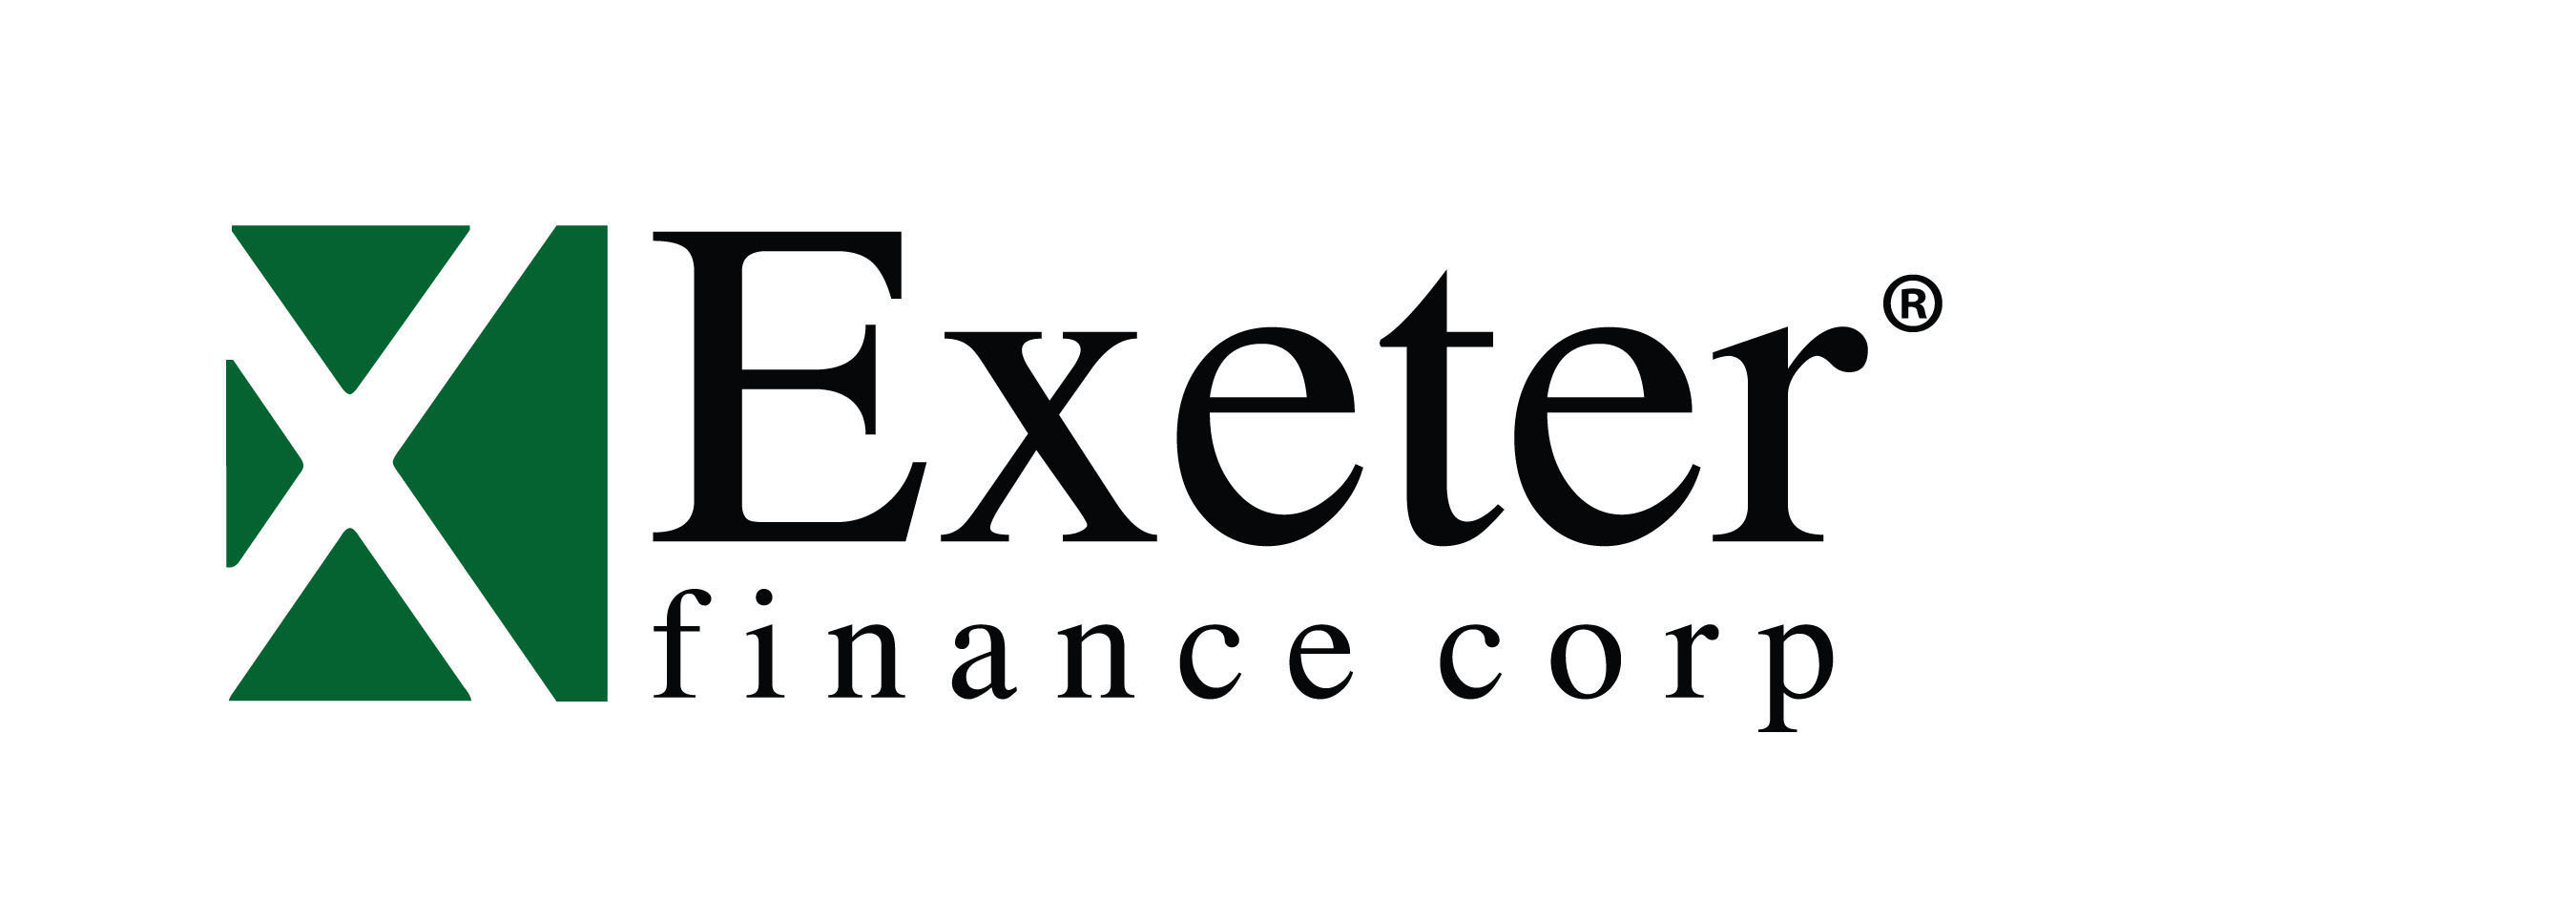 Exeter Finance Corp. Announces $550 Million Securitization